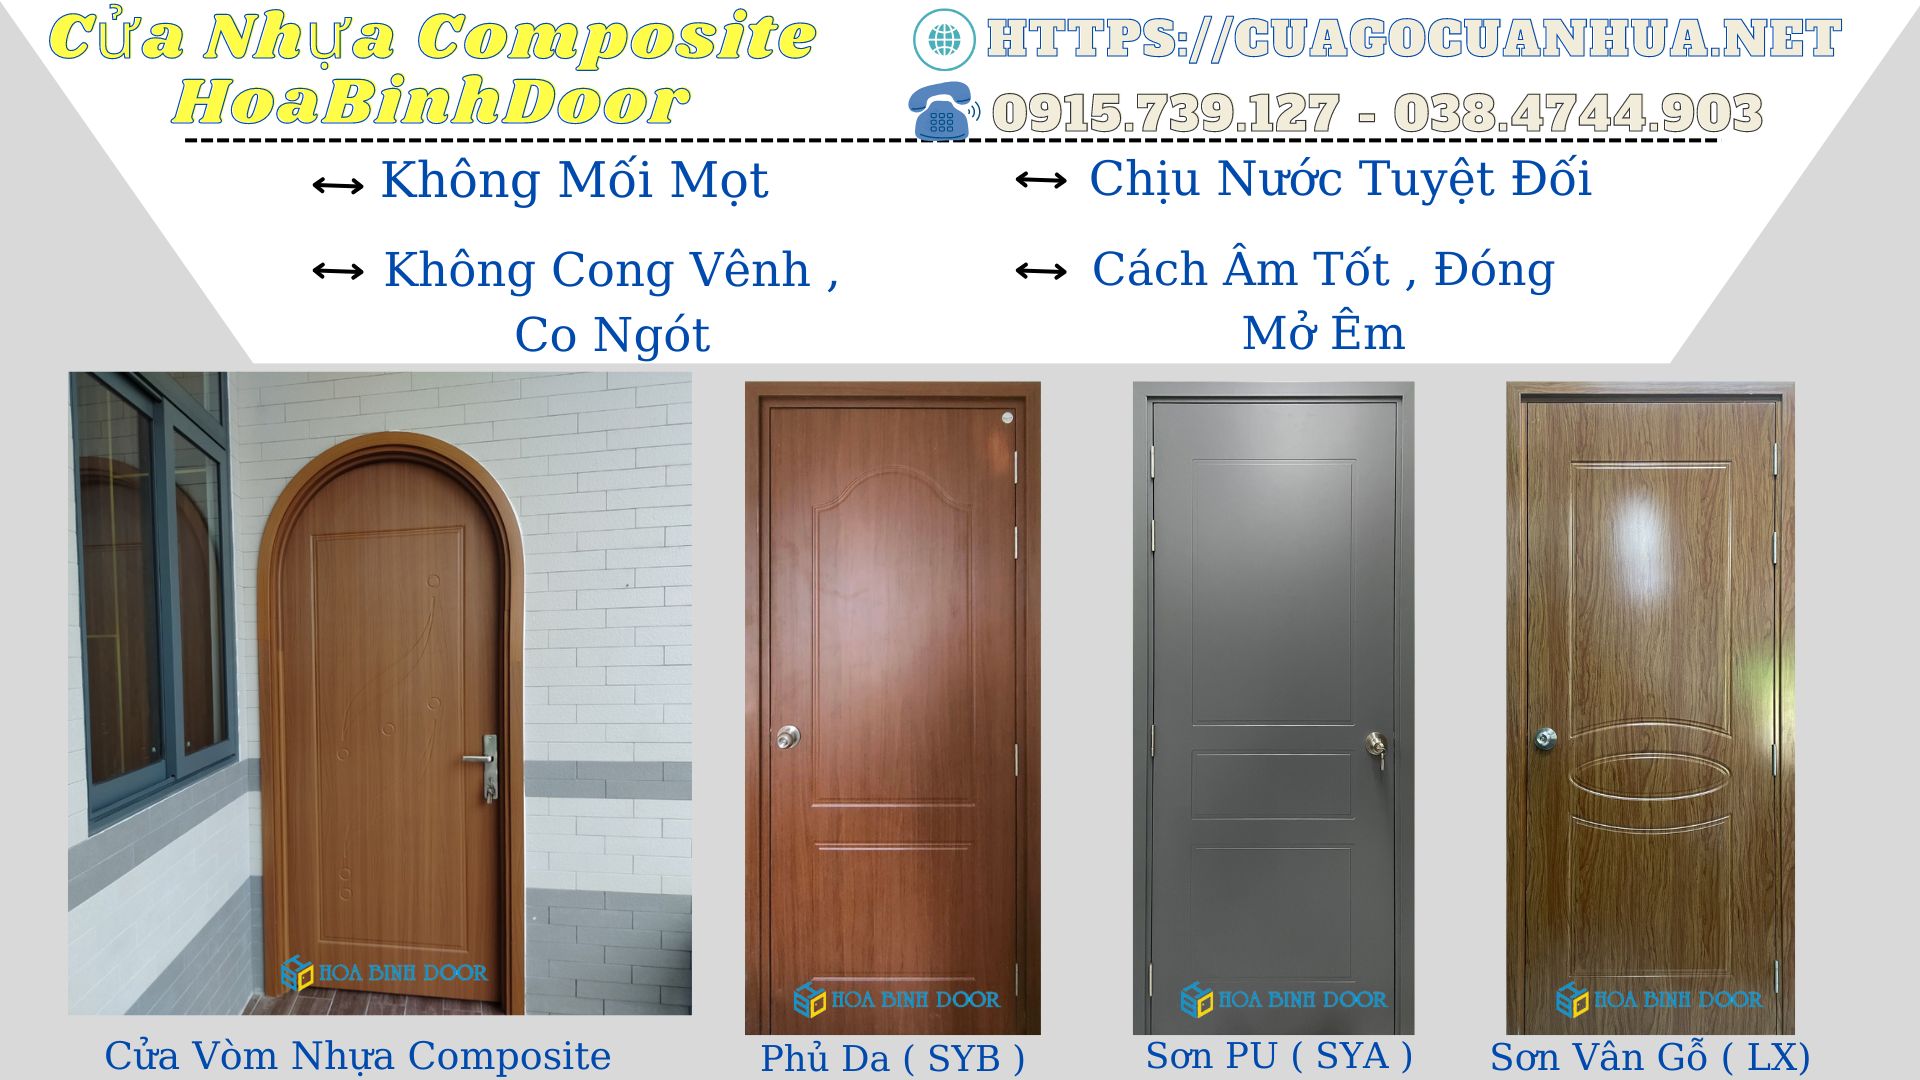 Cửa Nhựa Composite Tại Bình Định - Cửa Nhựa Gỗ HoaBinhDoor